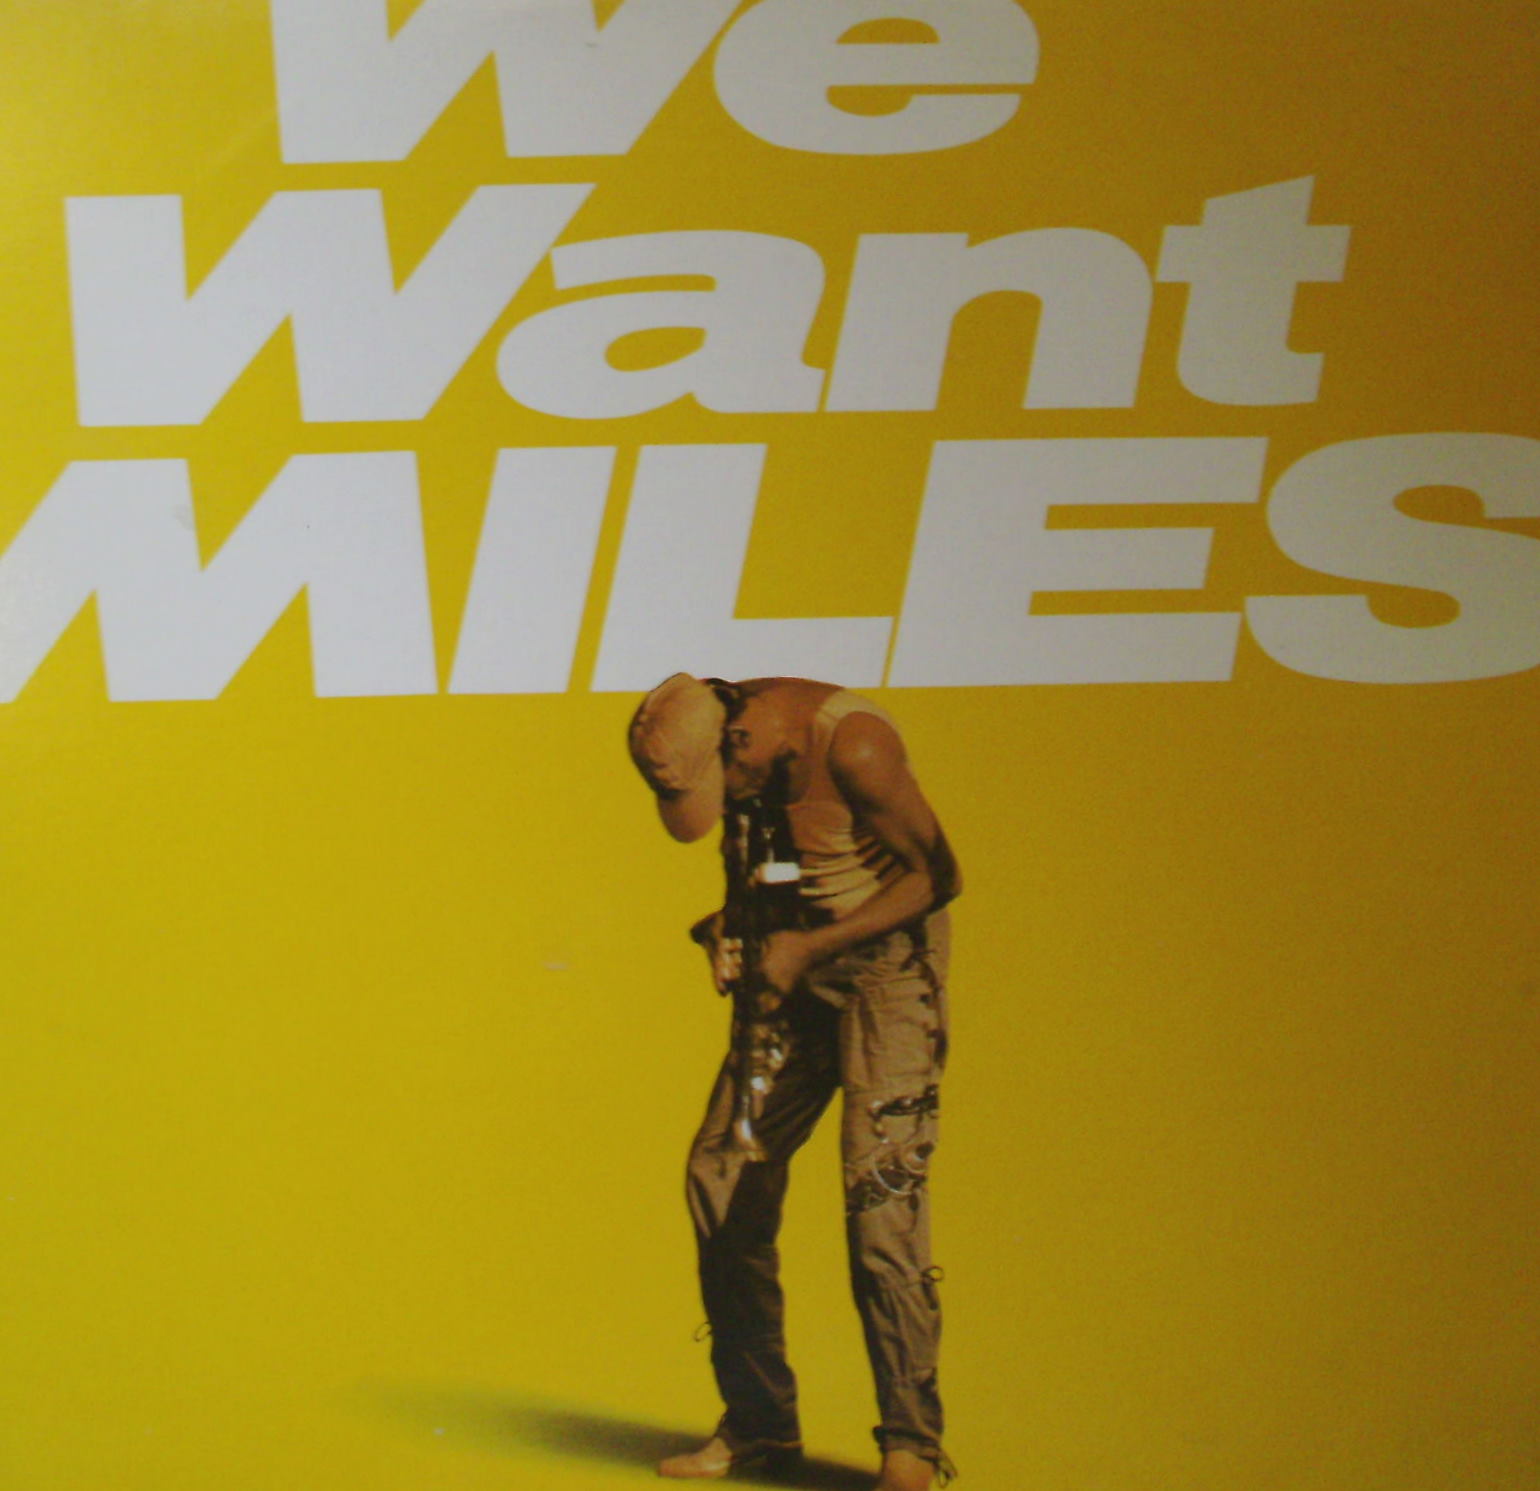 Miles Davis / We Want Miles